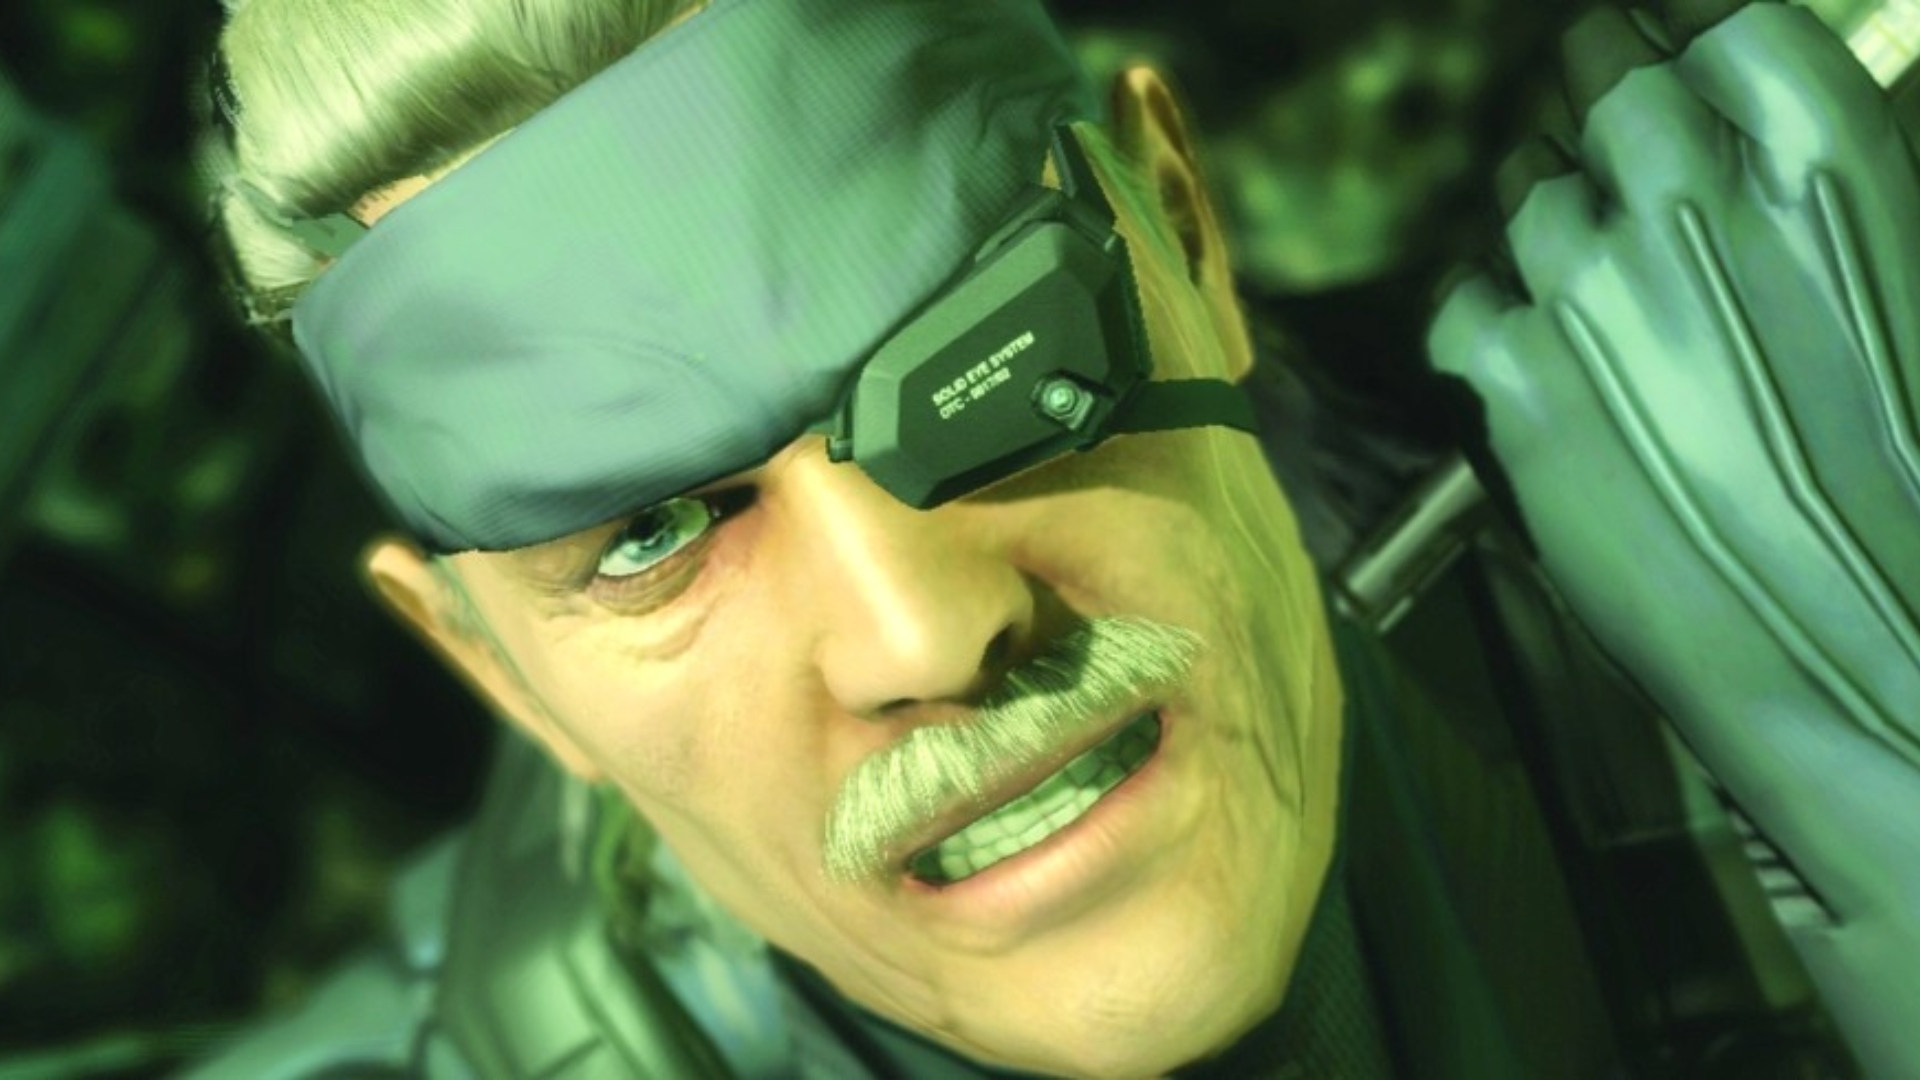 Metal Gear Solid Delta: Snake Eater - Wikipedia